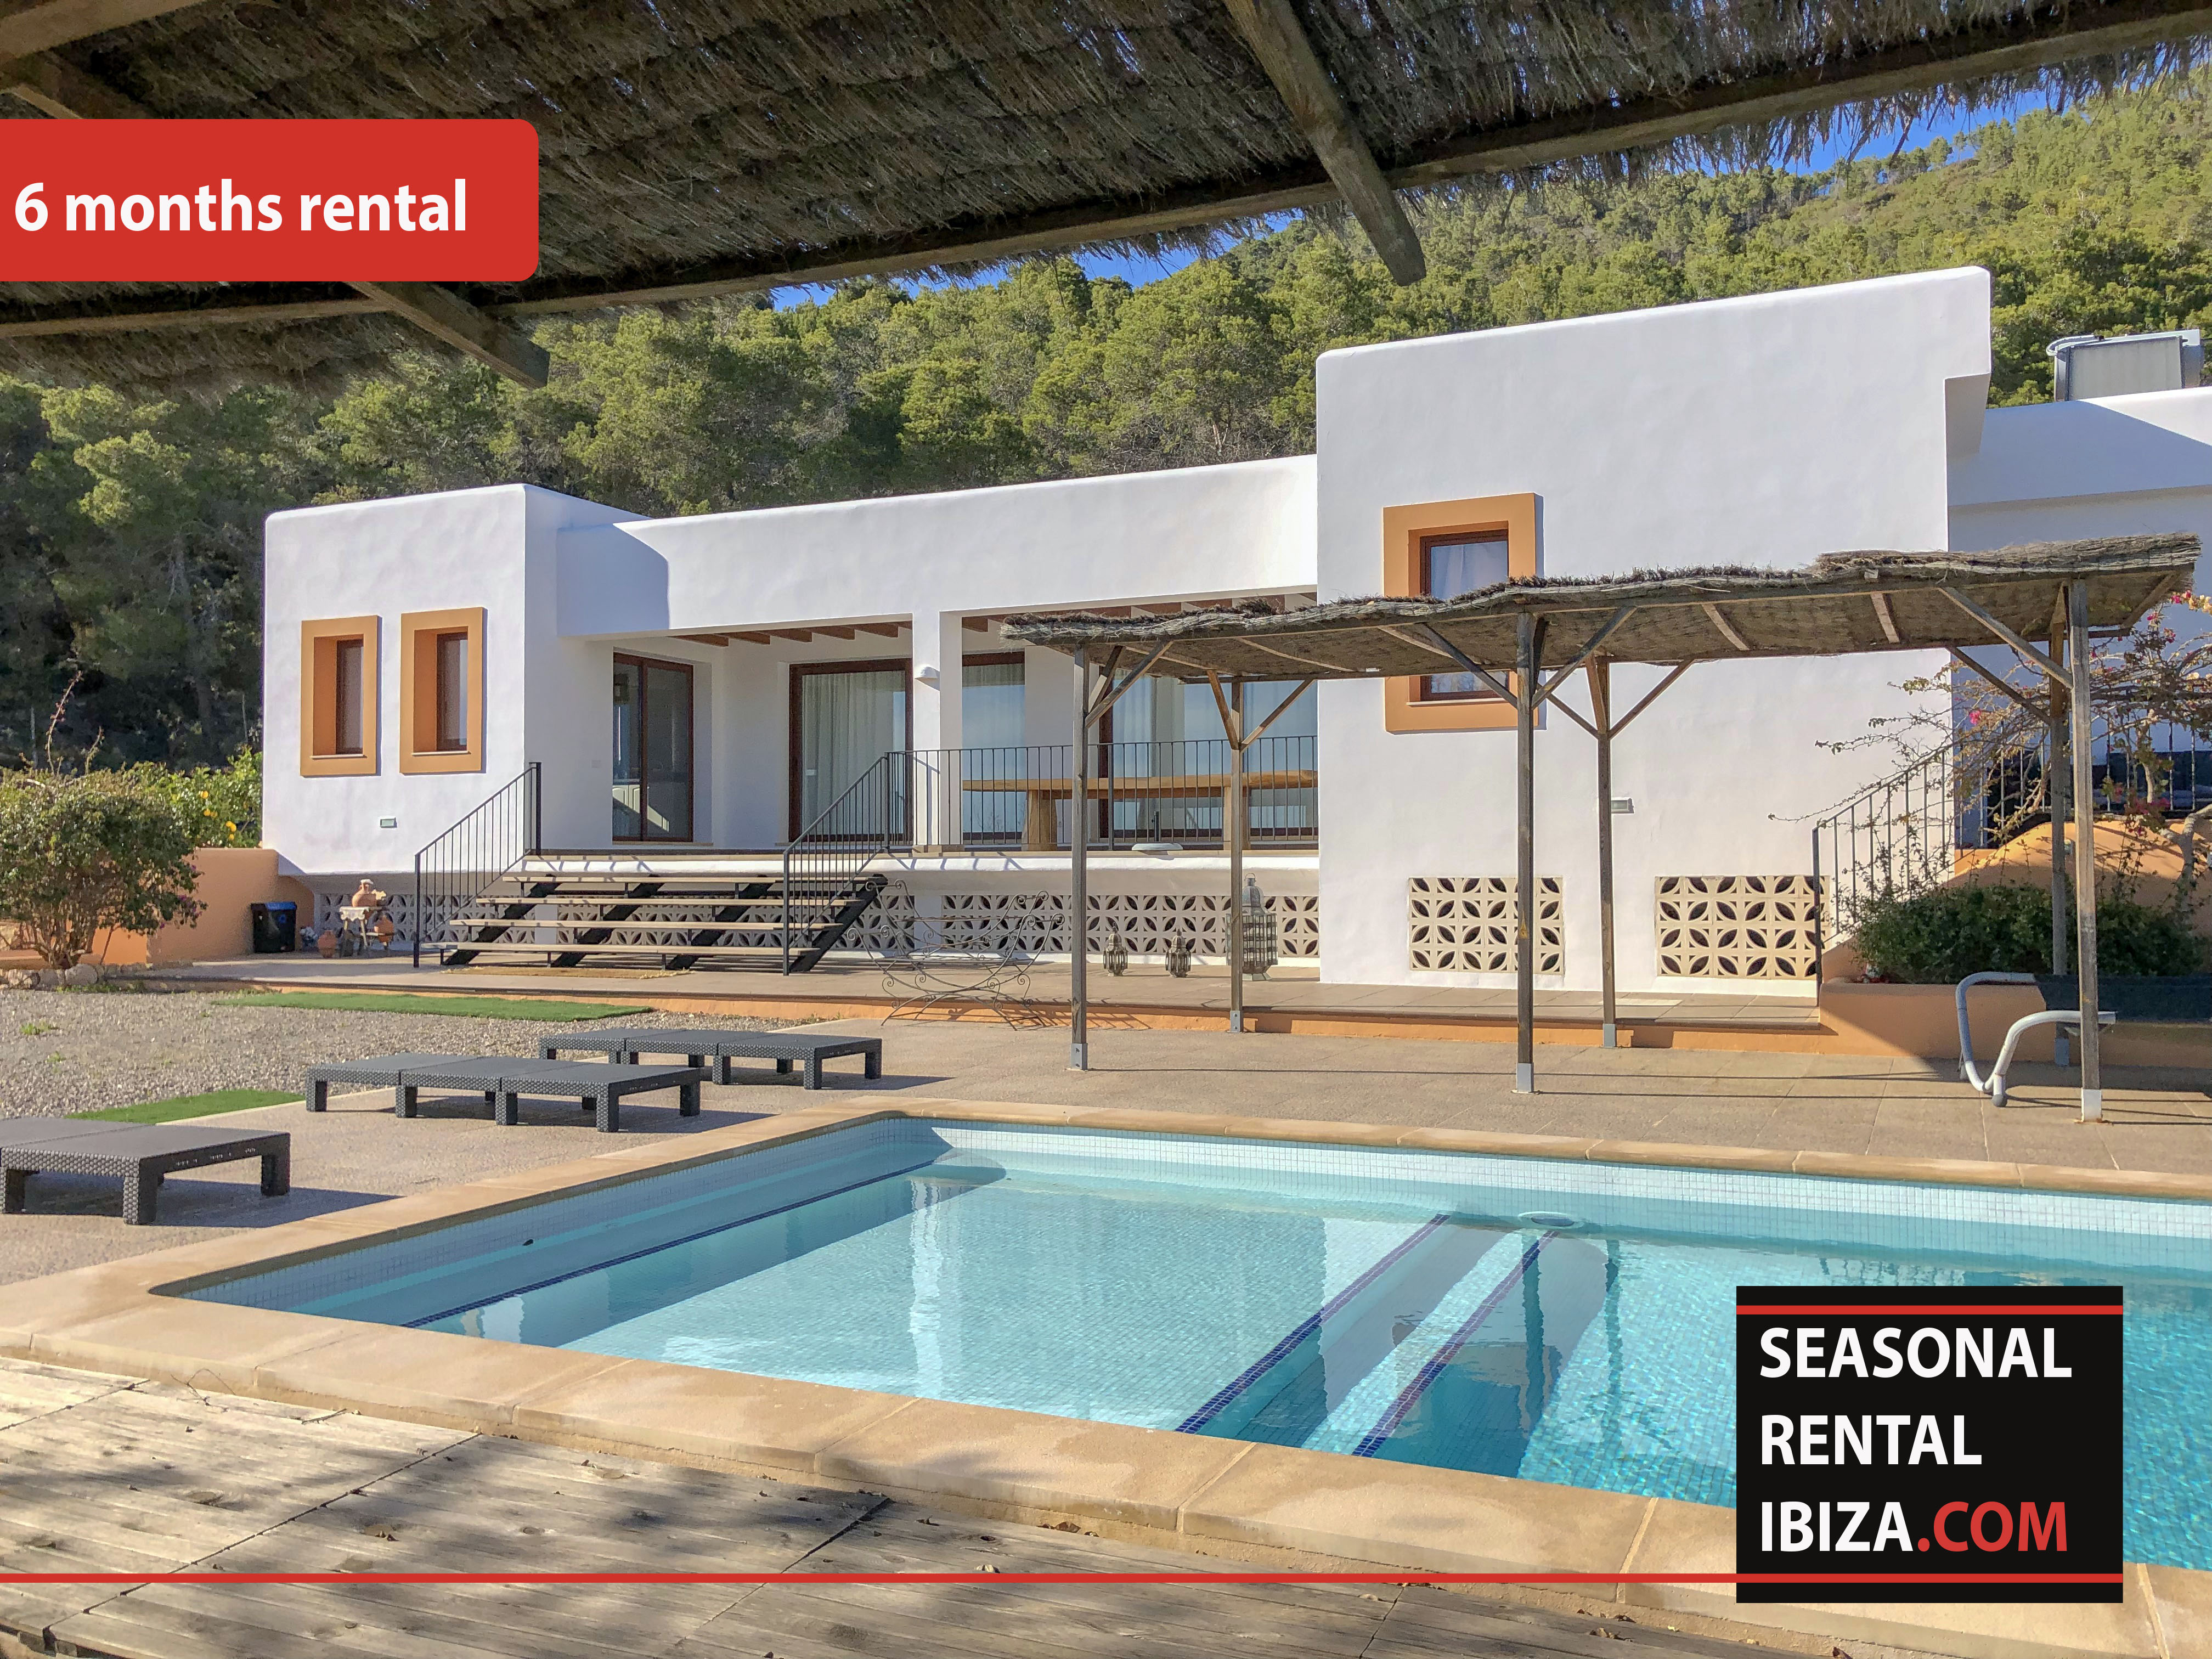 Seasonal rental Ibiza Villa Dos Valles